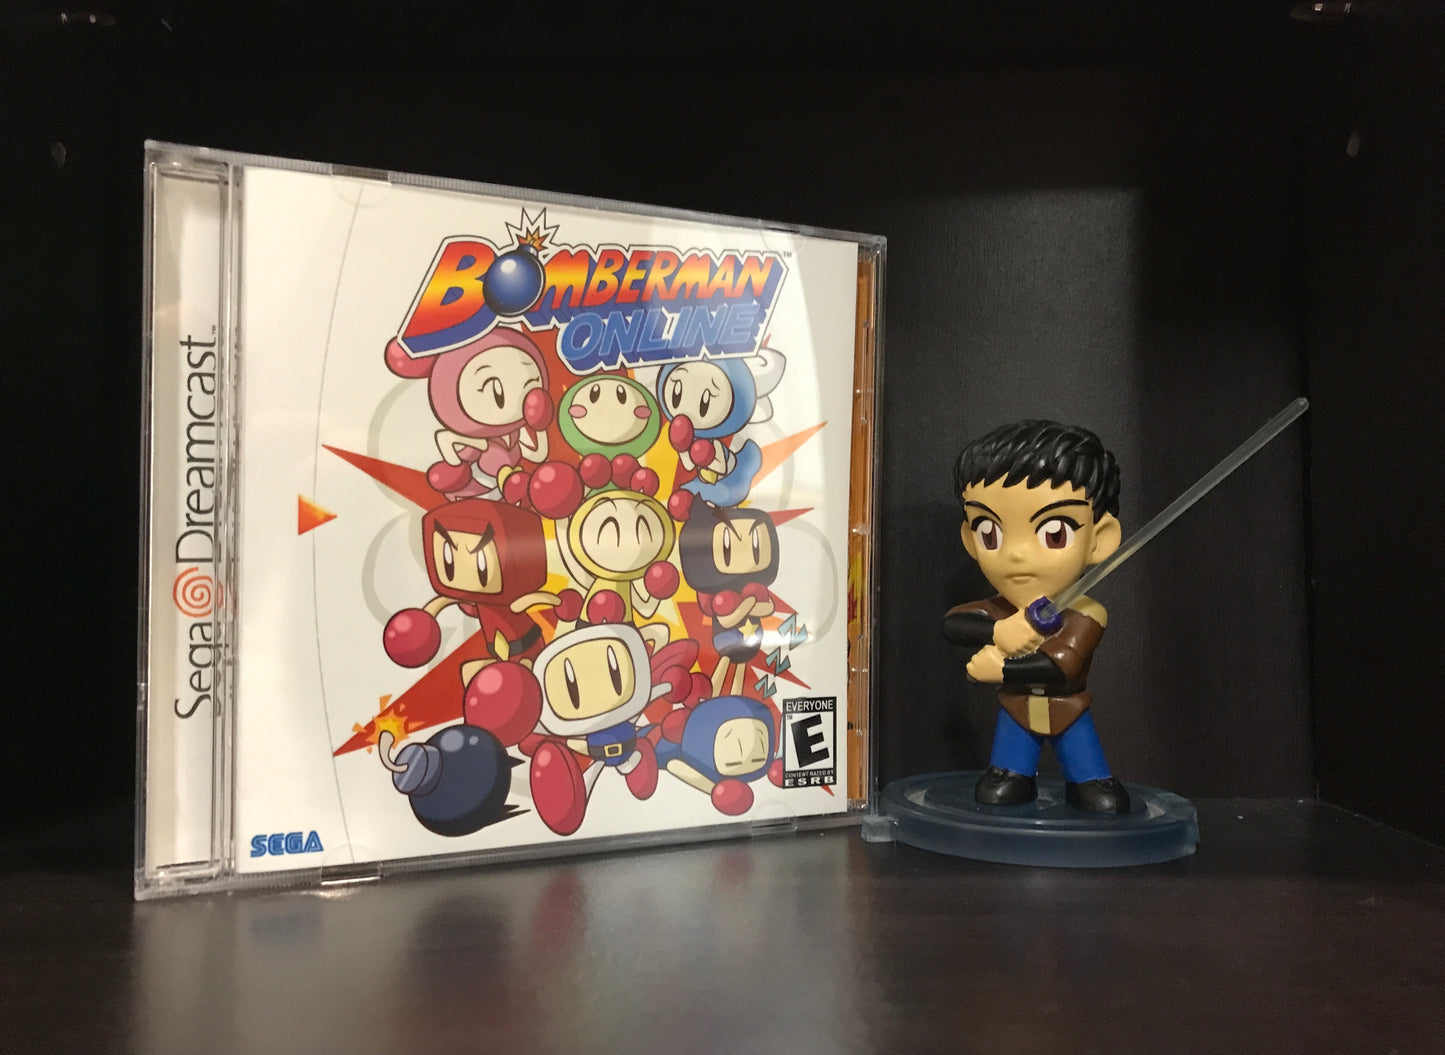 Bomberman Online [Sega Dreamcast] Reproduction